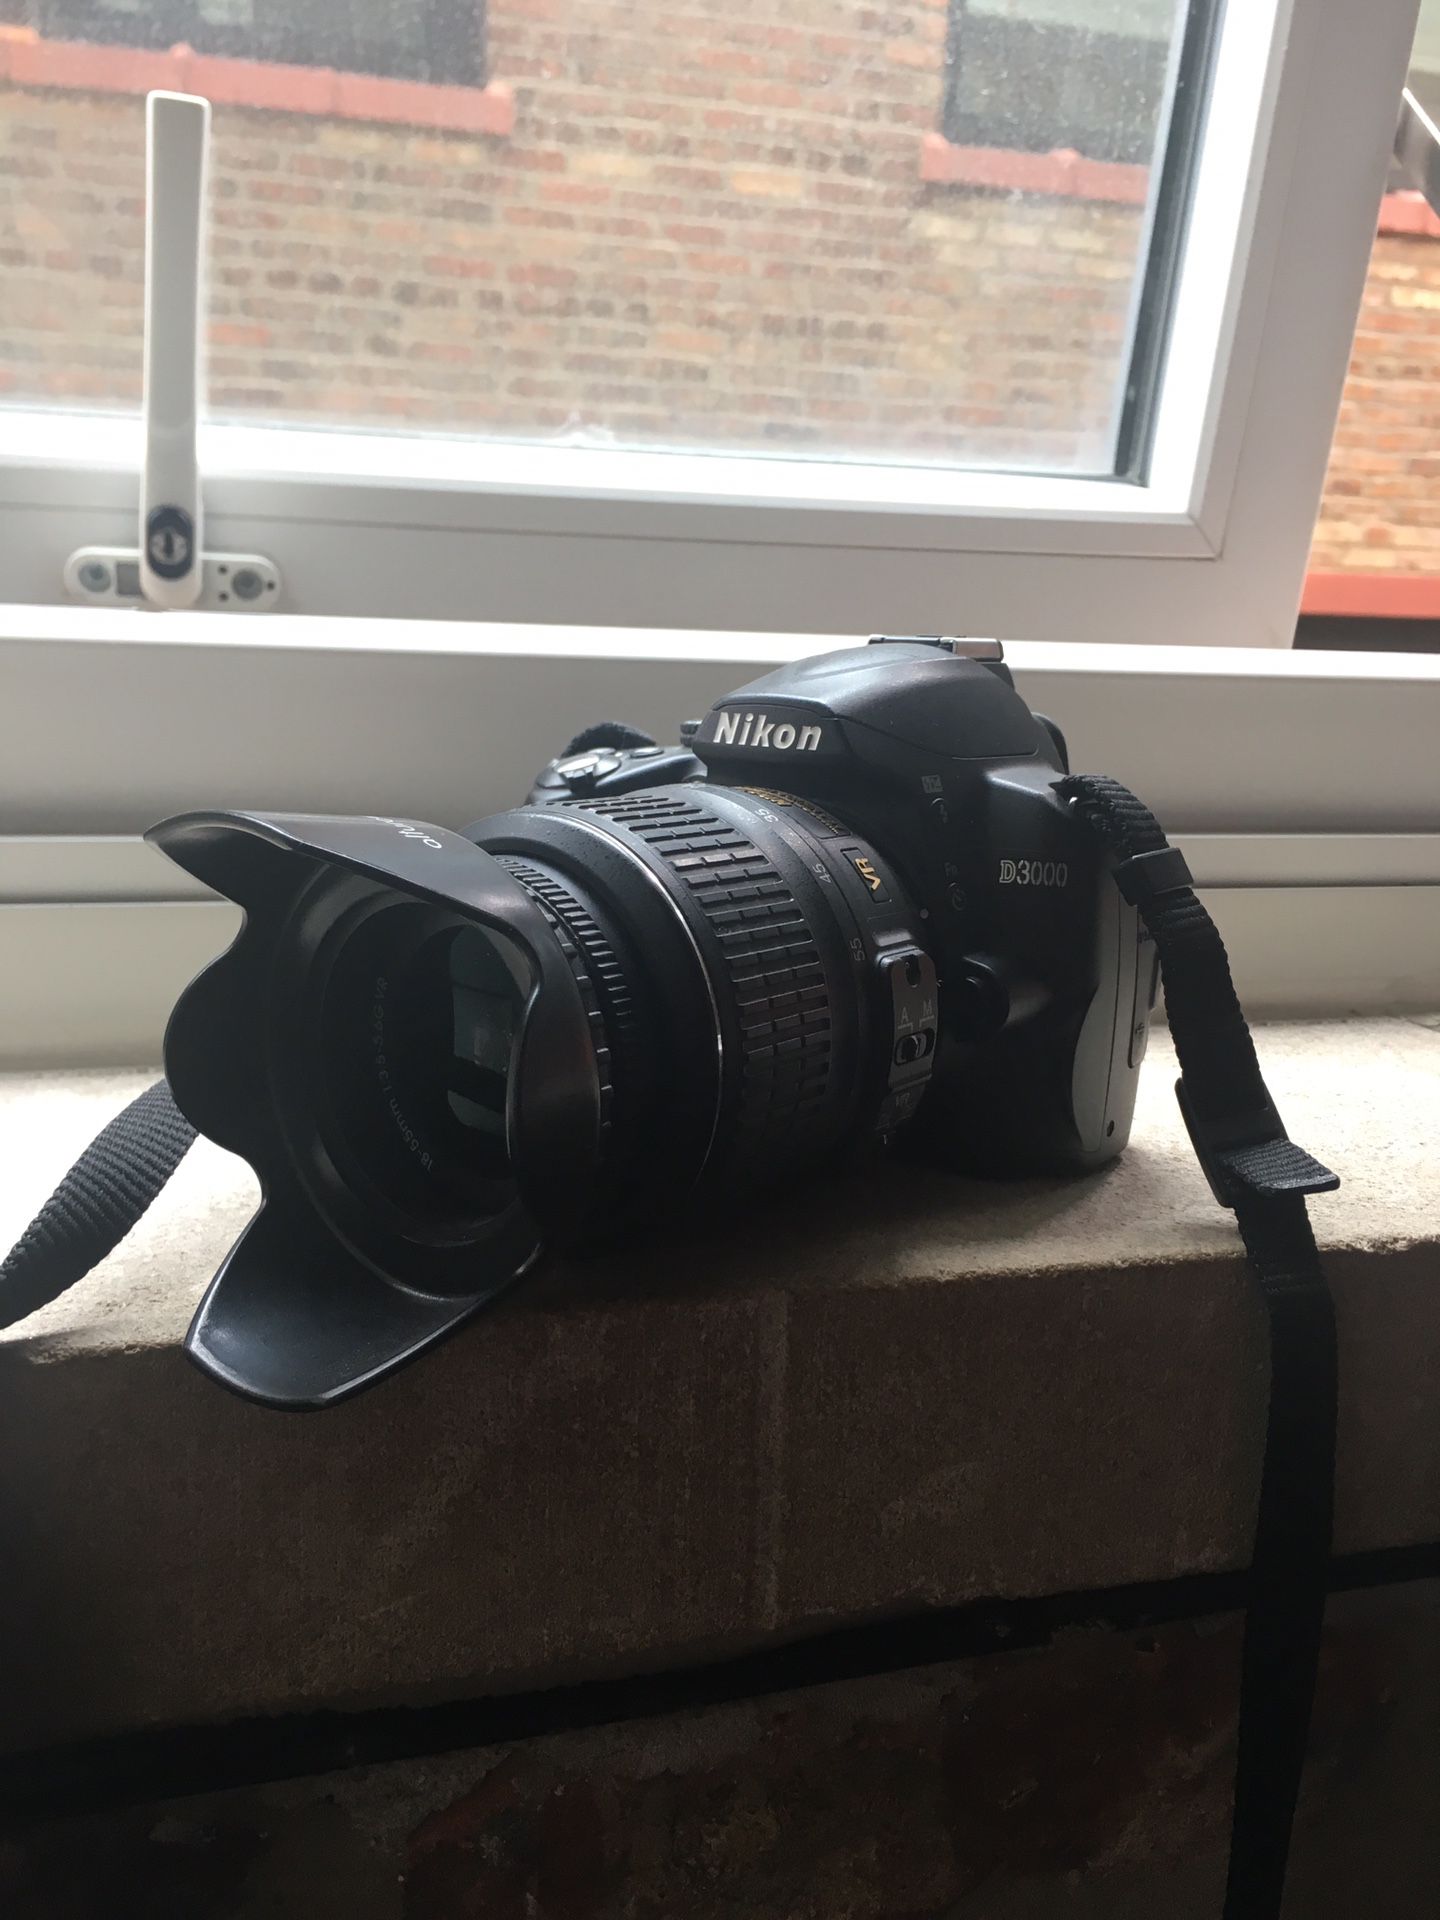 Nikon D3000 with 18-55 Kit lens